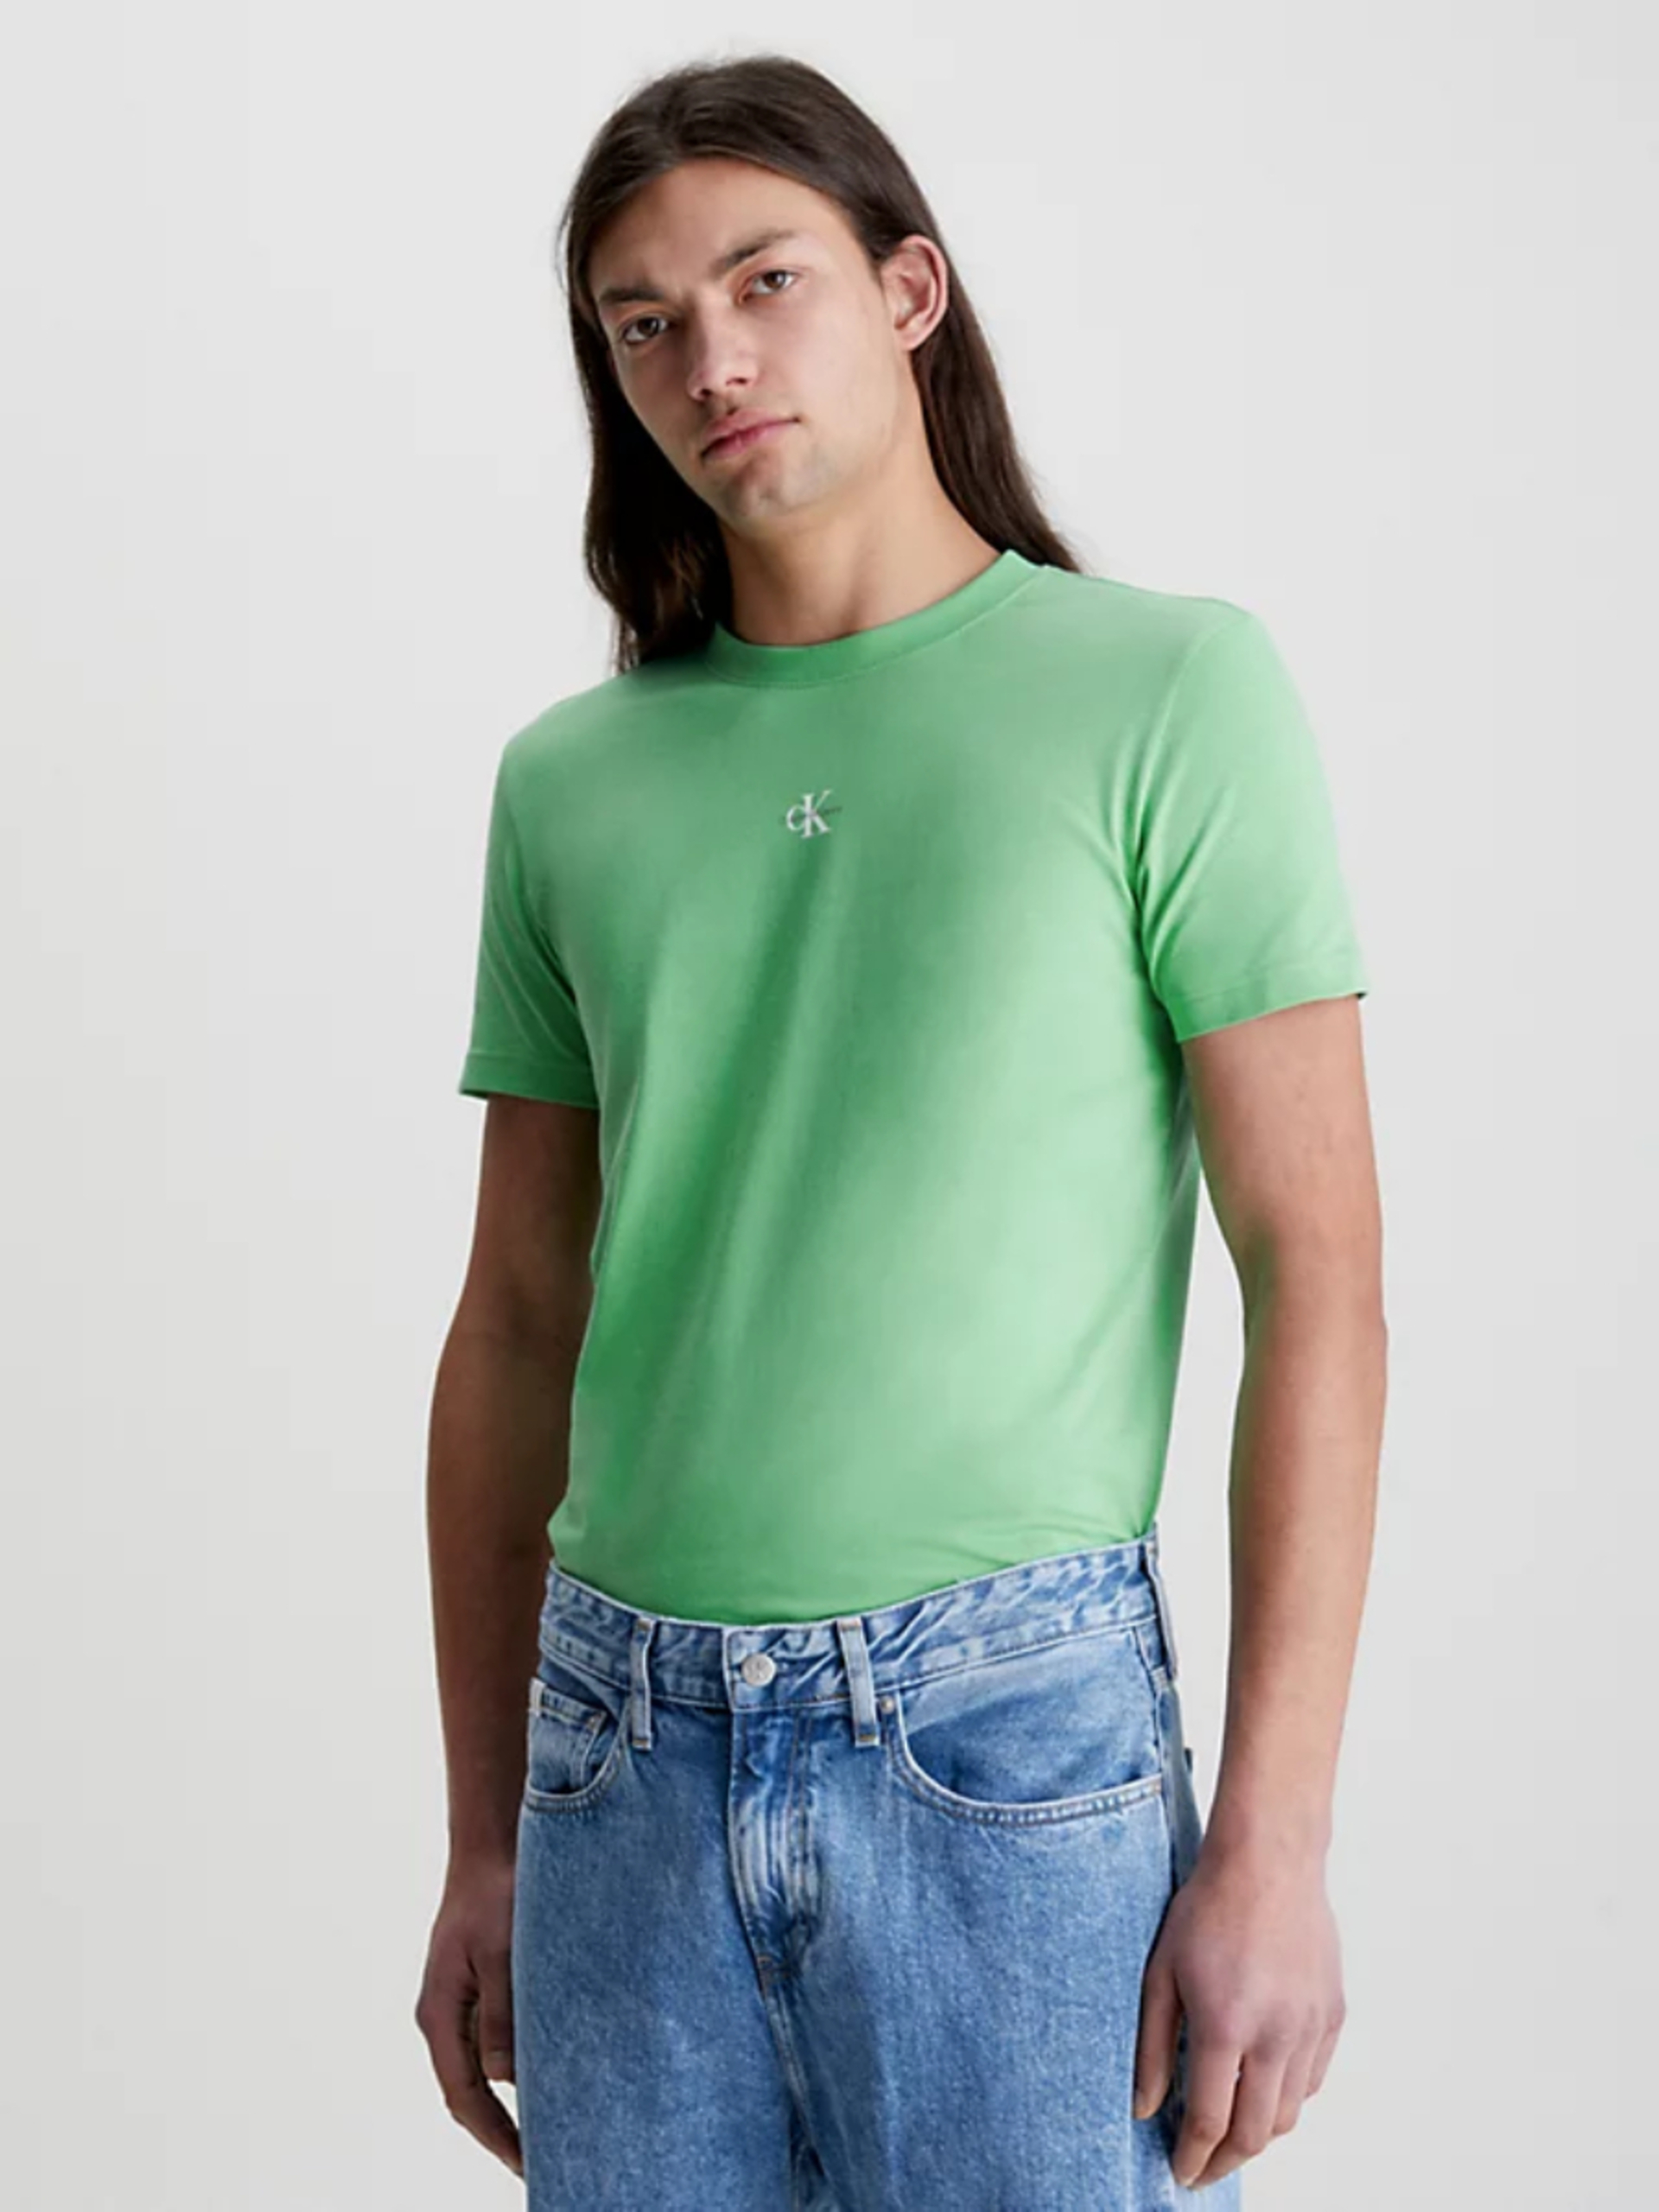 Calvin Klein pánské zelené tričko MICRO MONOLOGO - XL (L1C)